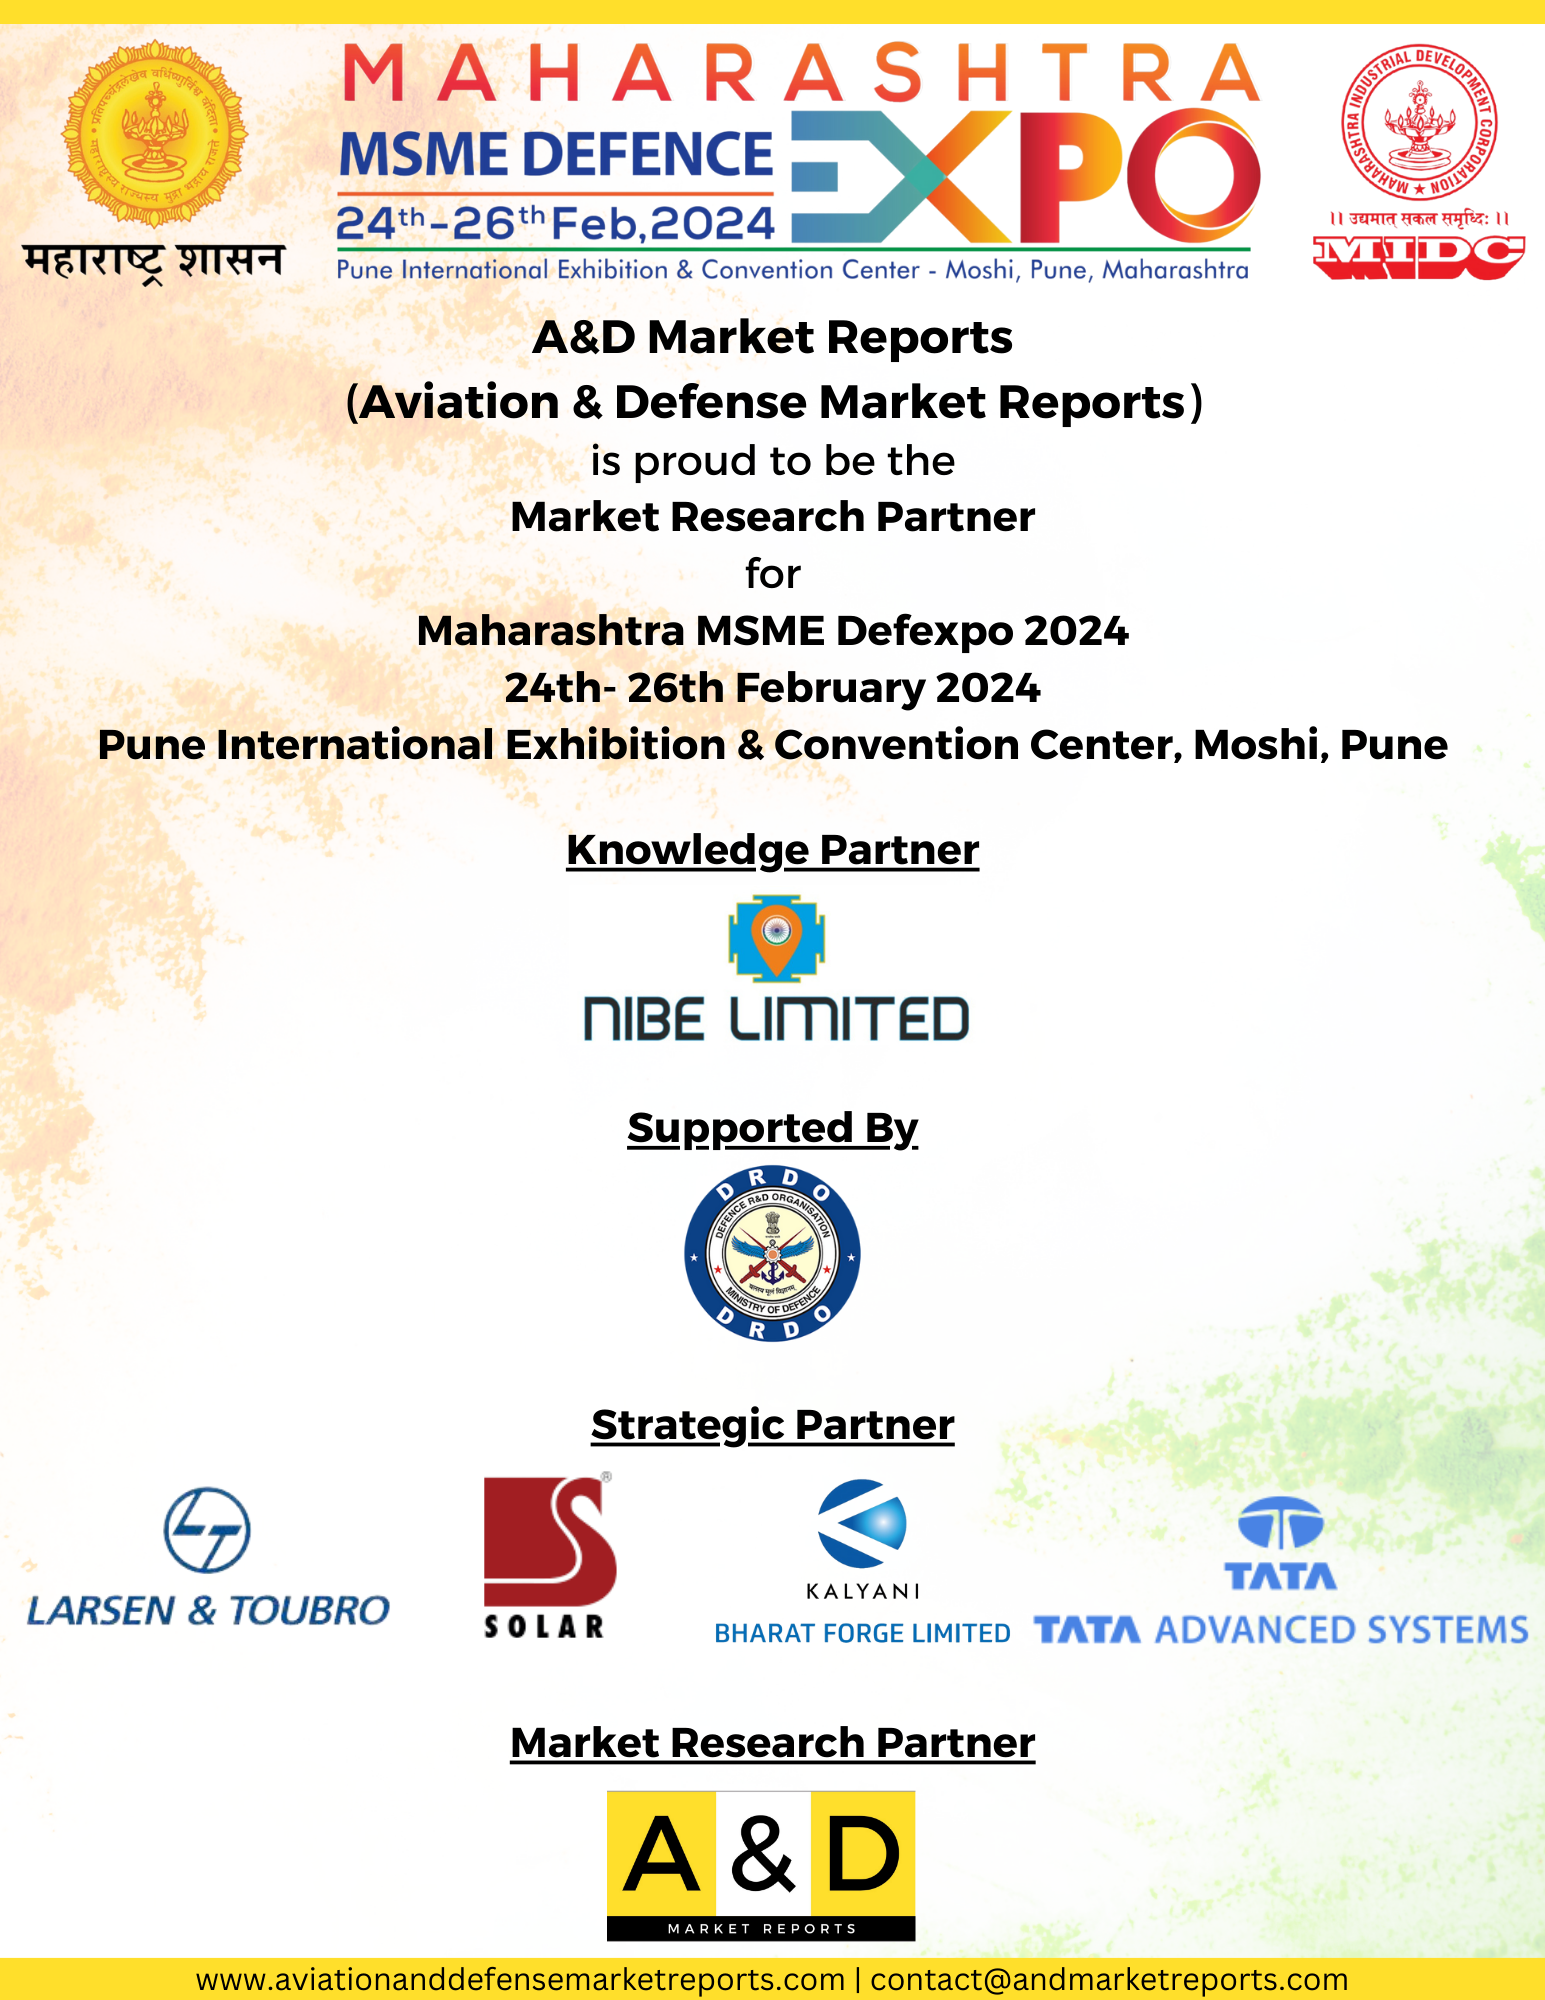 Market Research Partner for MSME Defexpo, Pune, Maharashtra, India